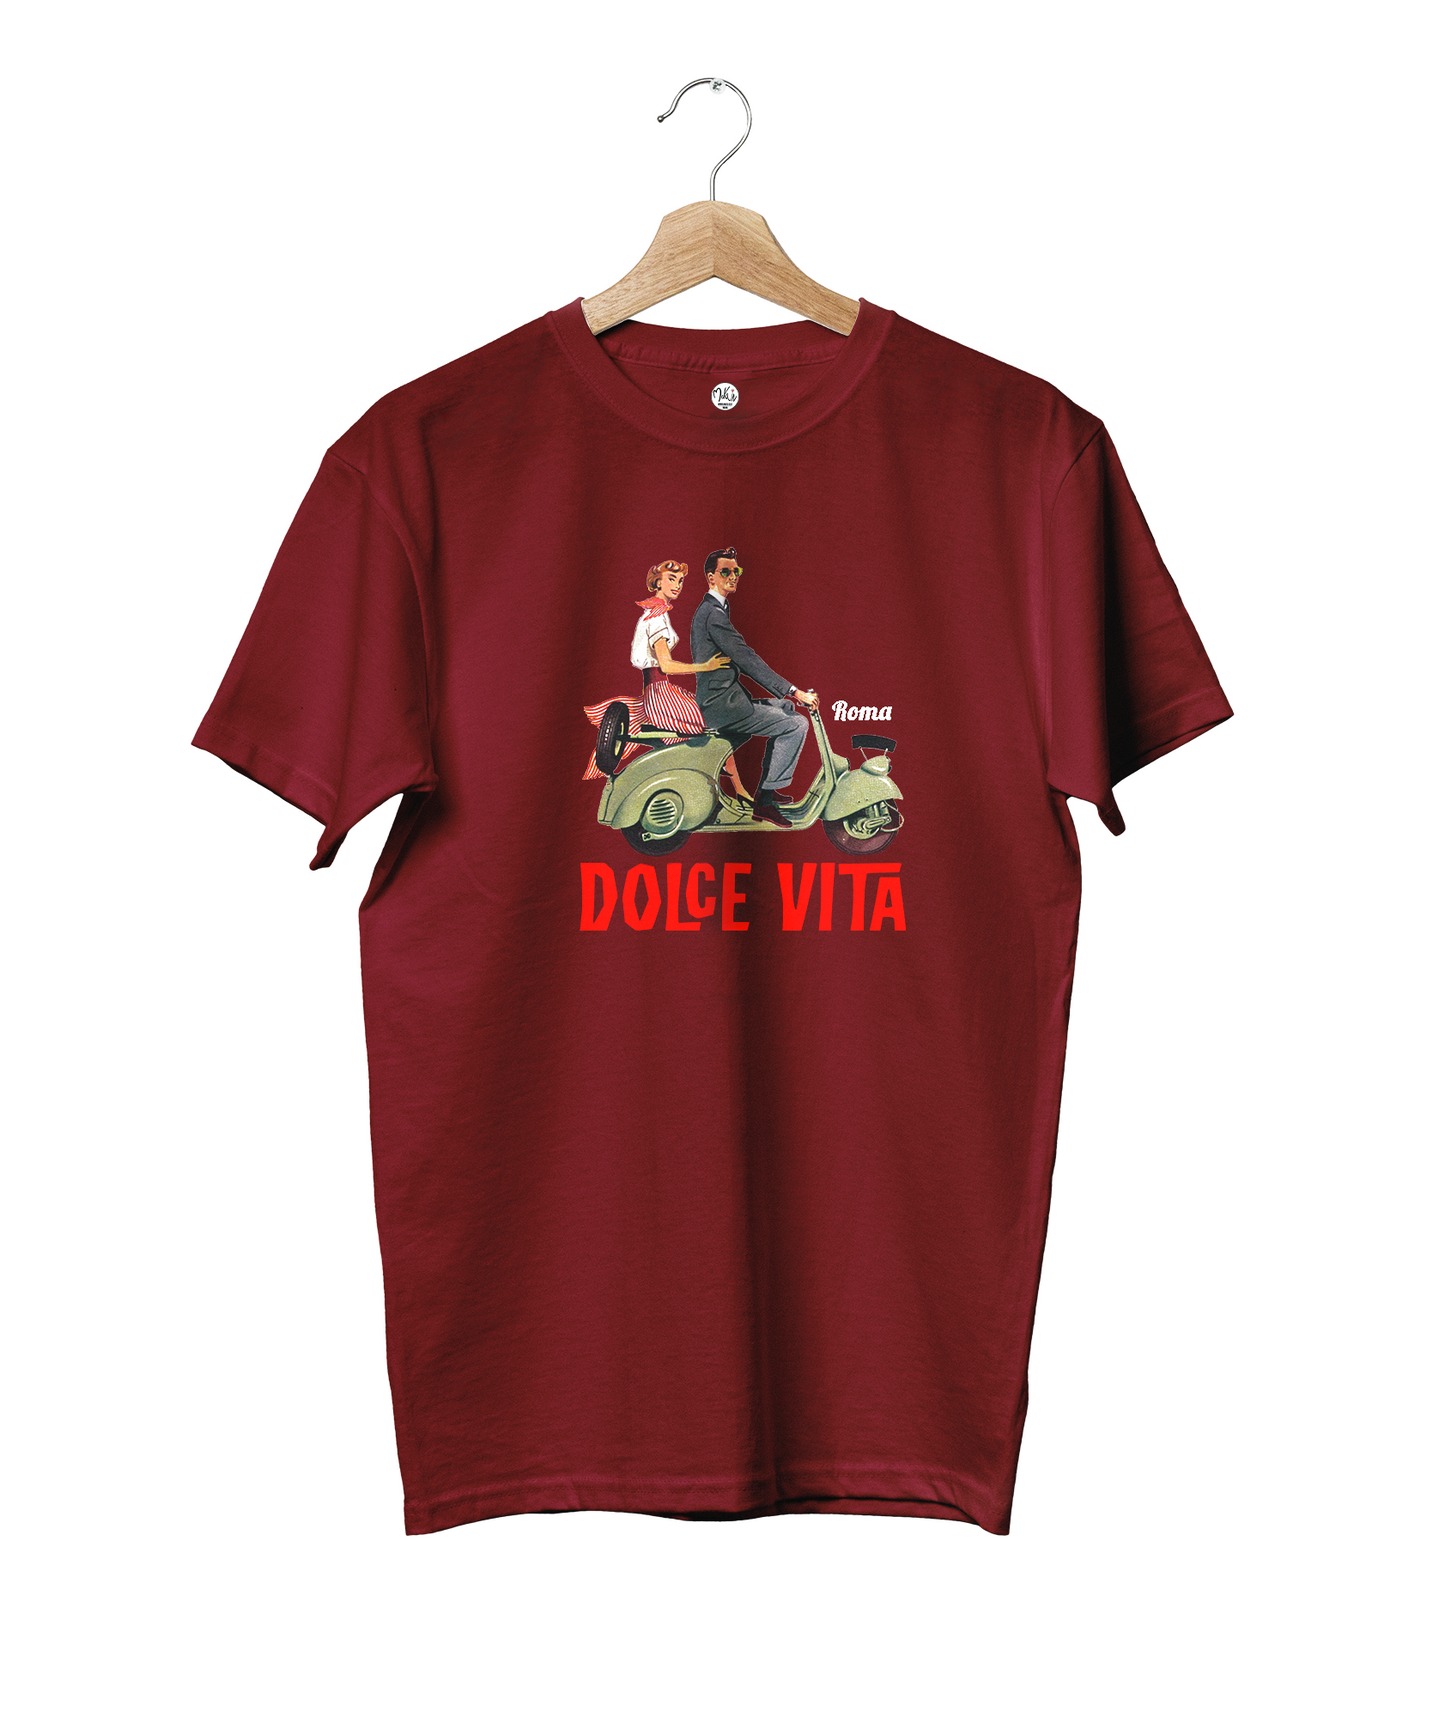 T-shirt Dolce Vita